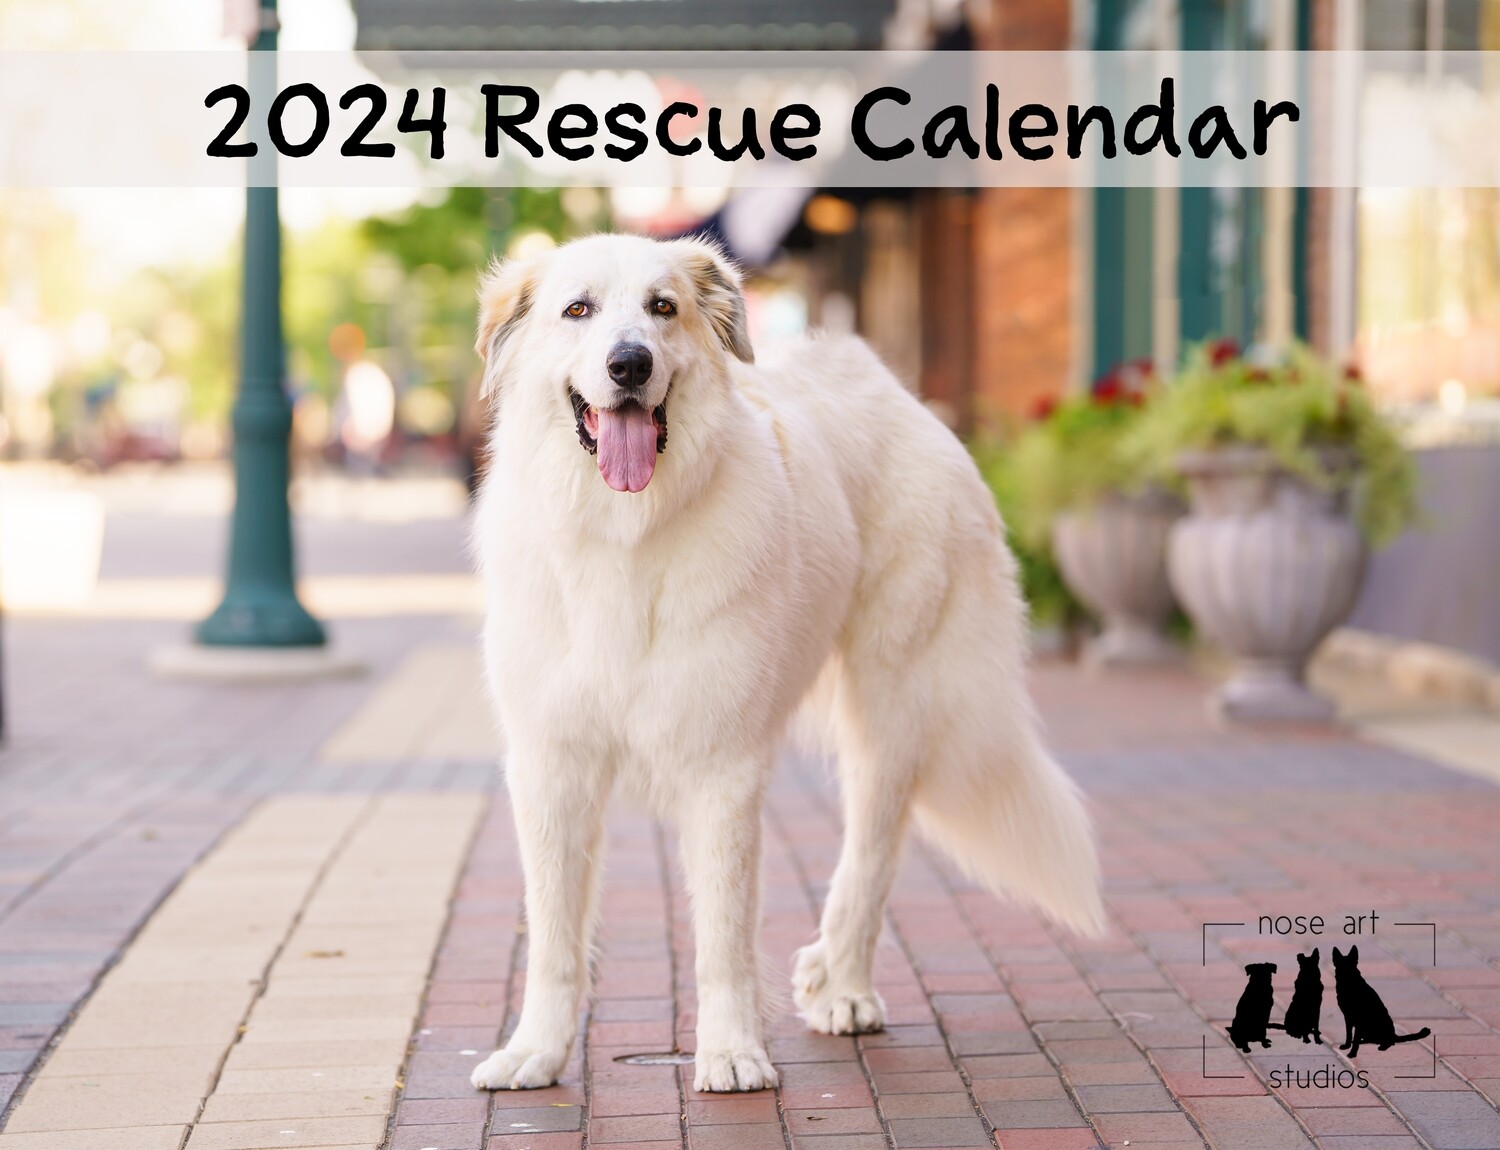 2024 Rescue Calendar by Nose Art Studios